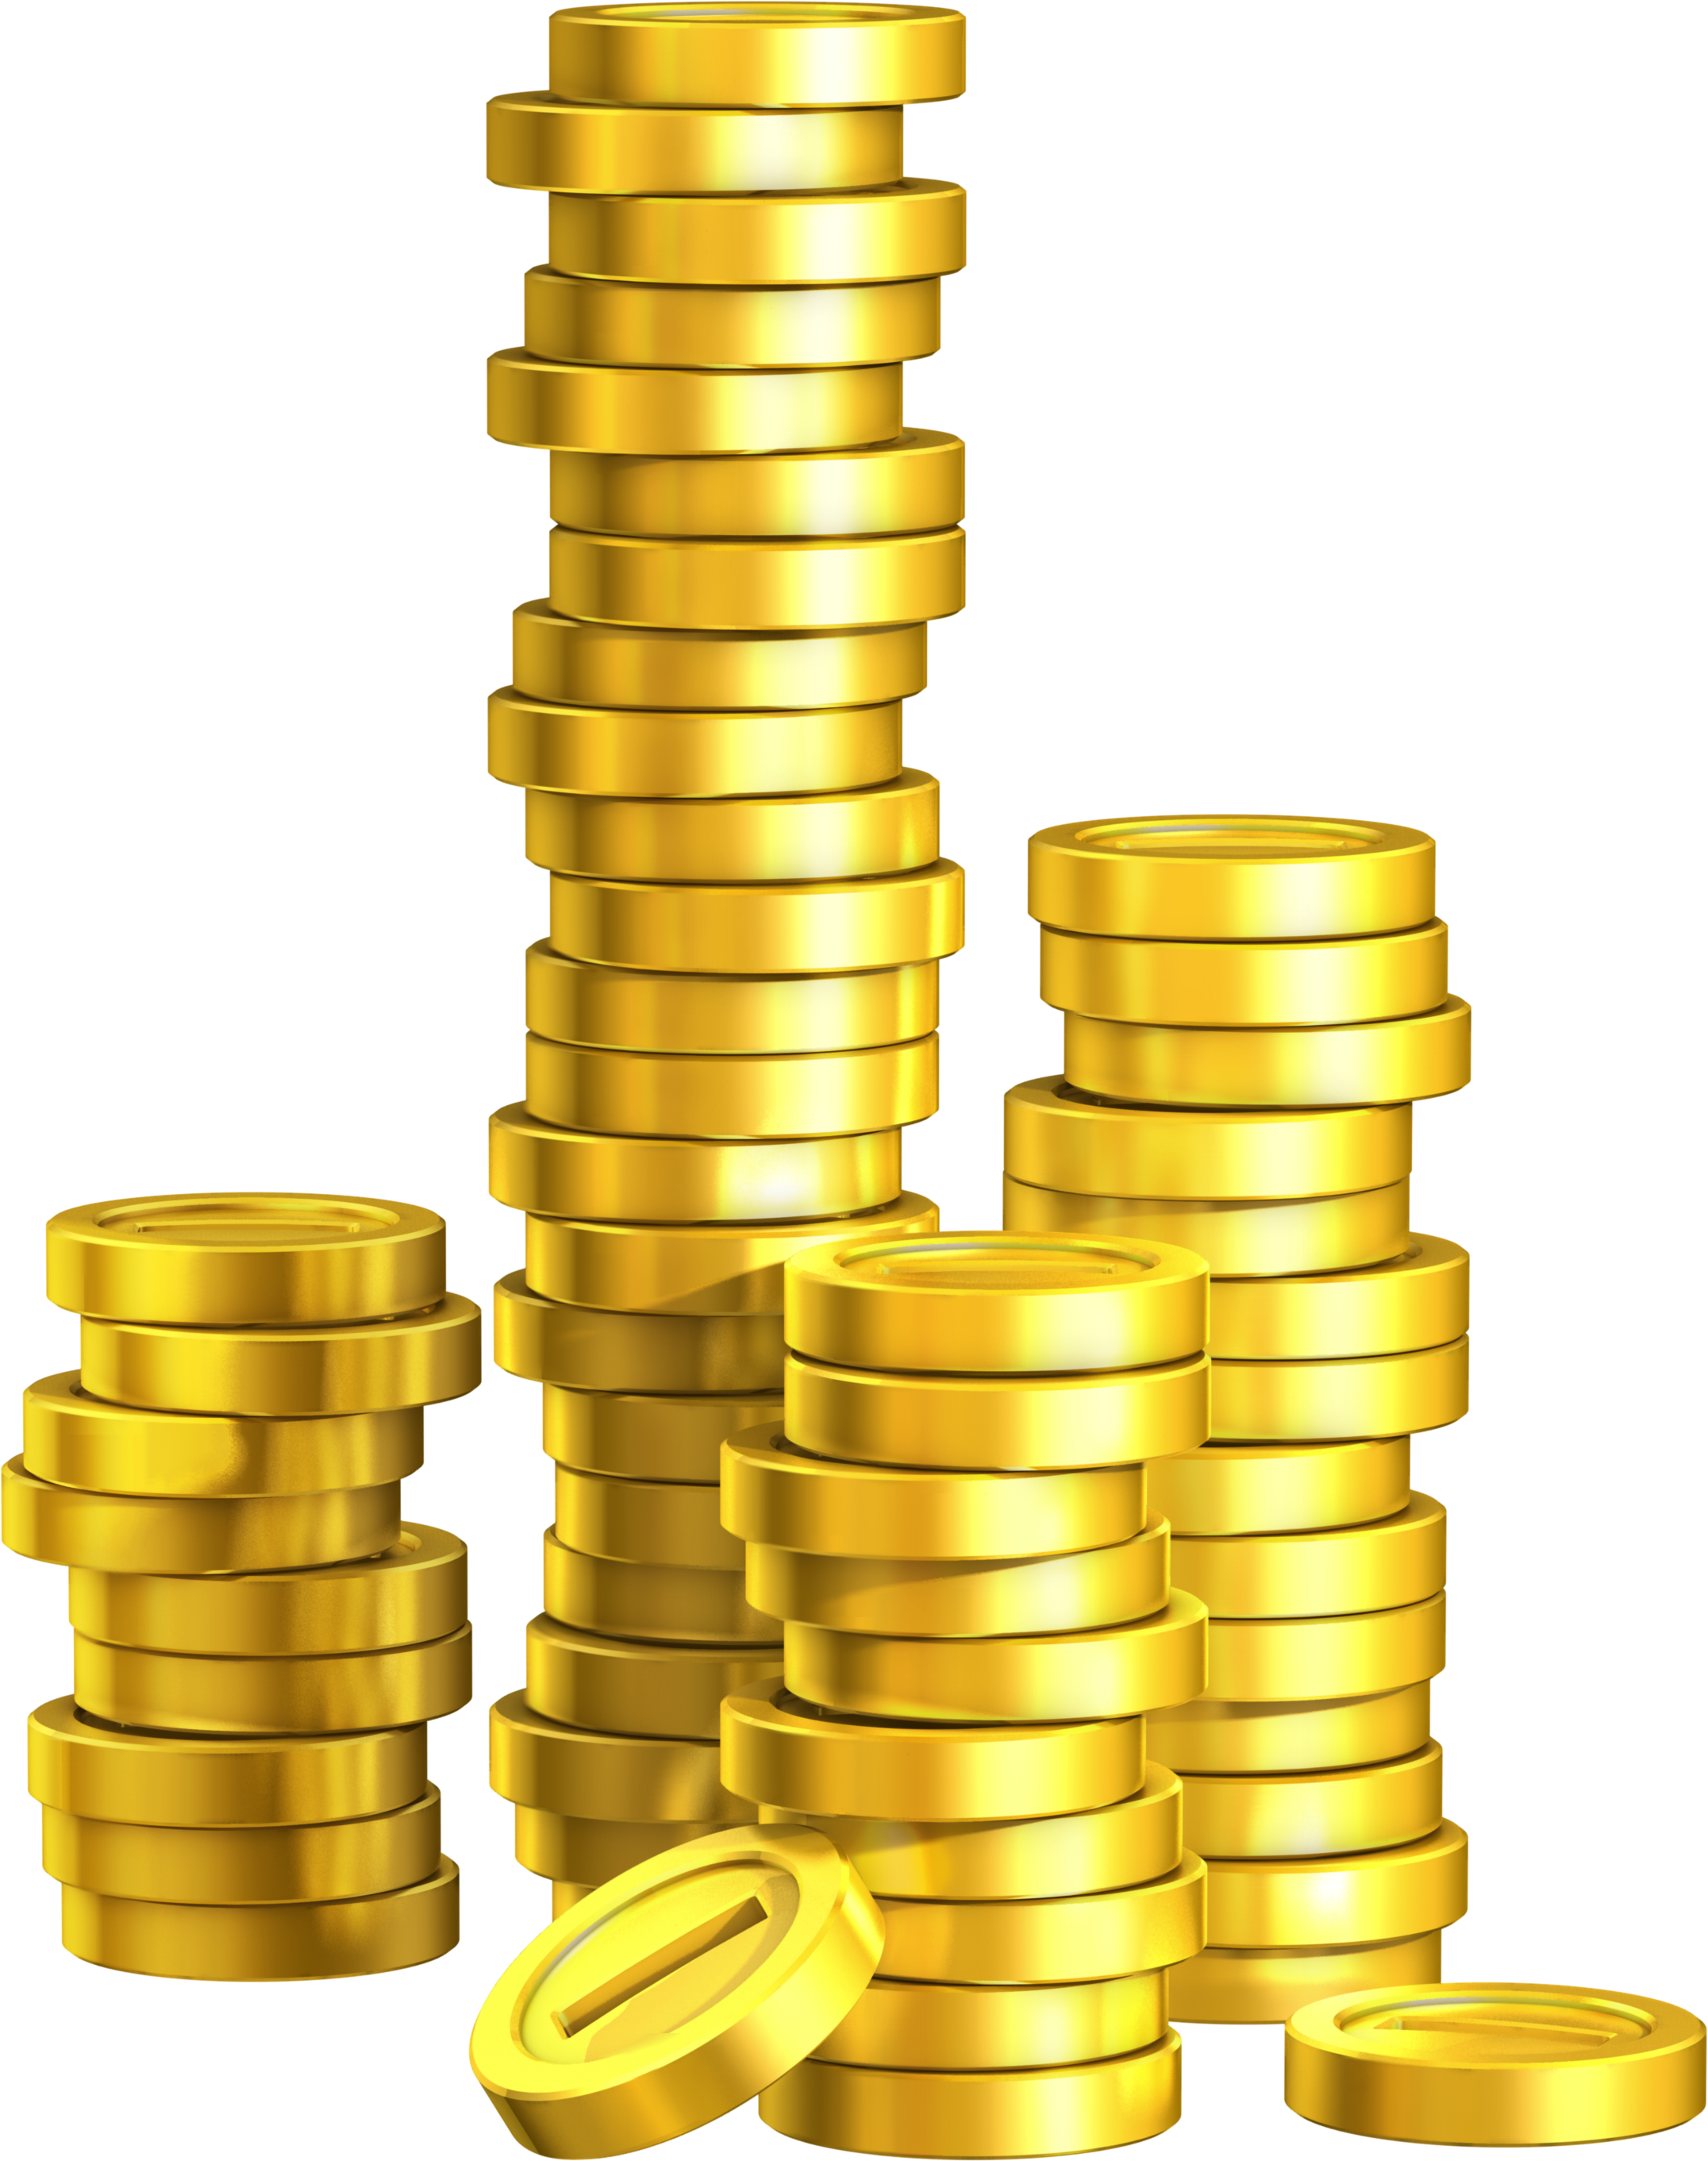 Investasi Stack Coin PNG Gambar Gratis